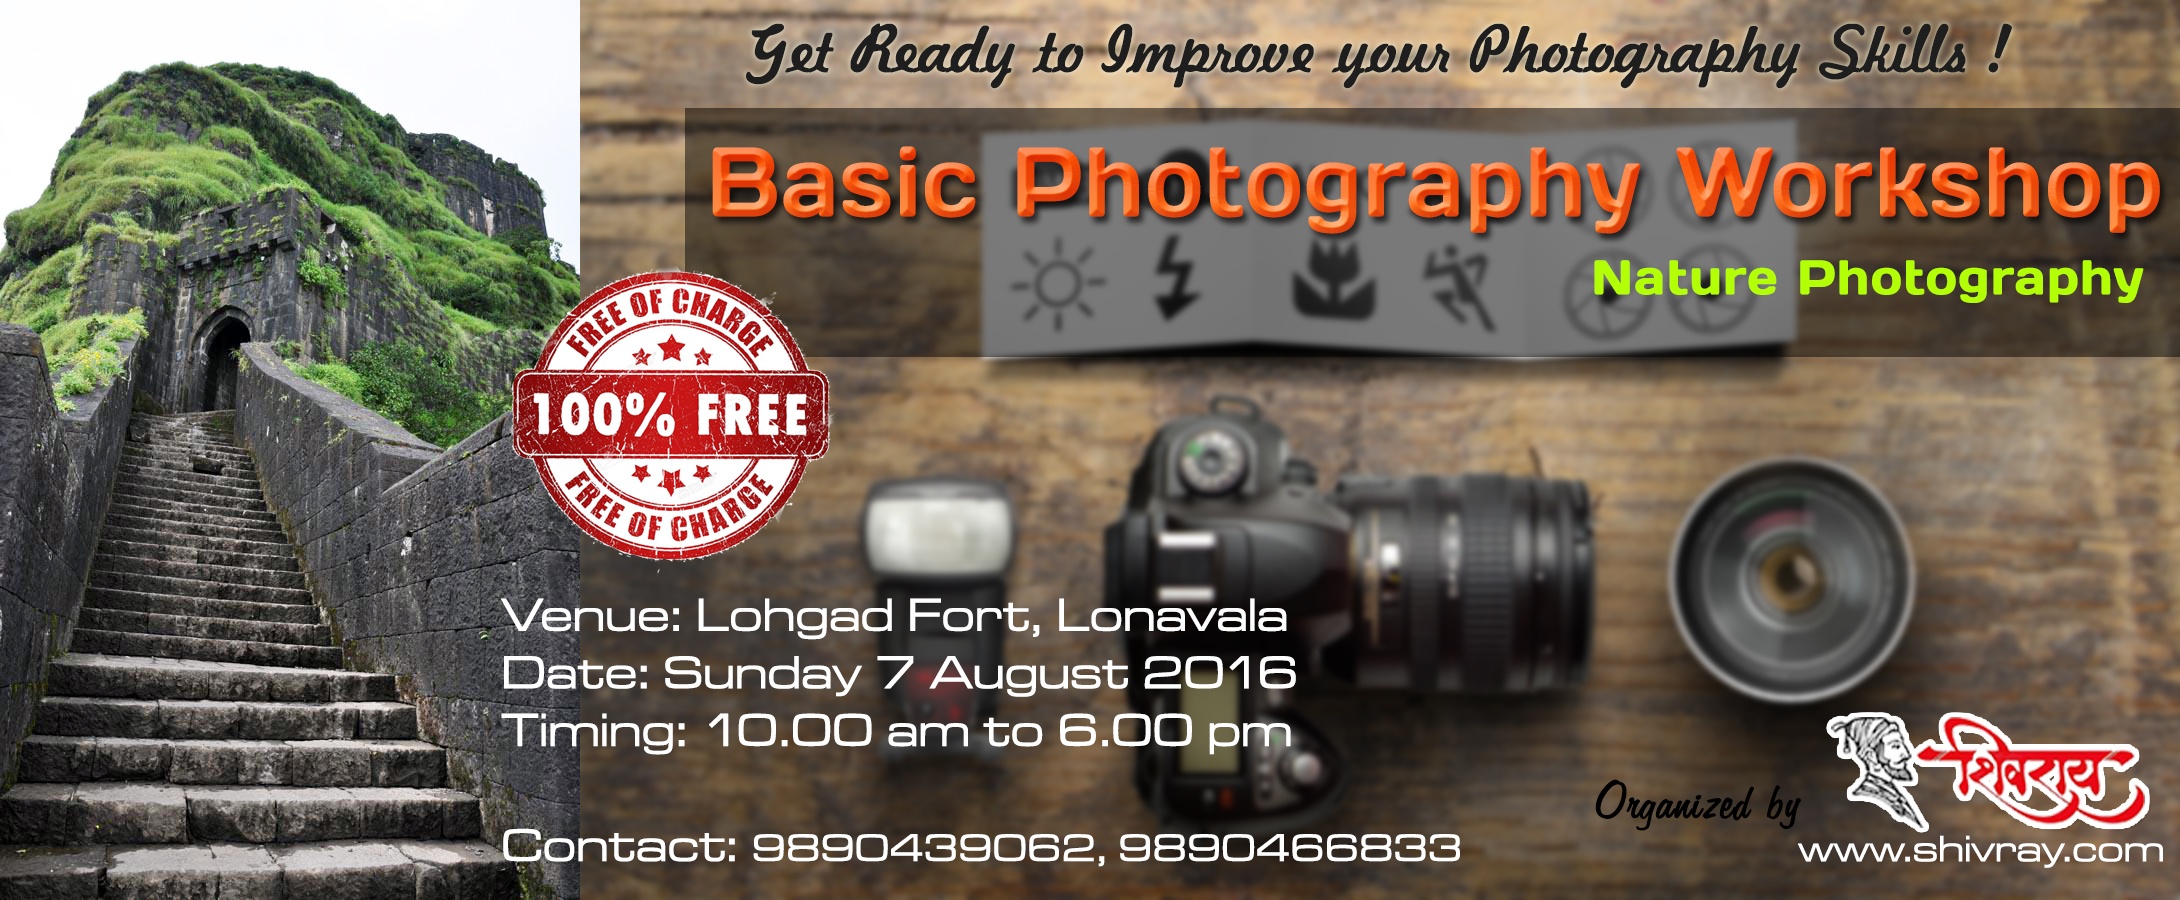 free photography workshop at lohagad